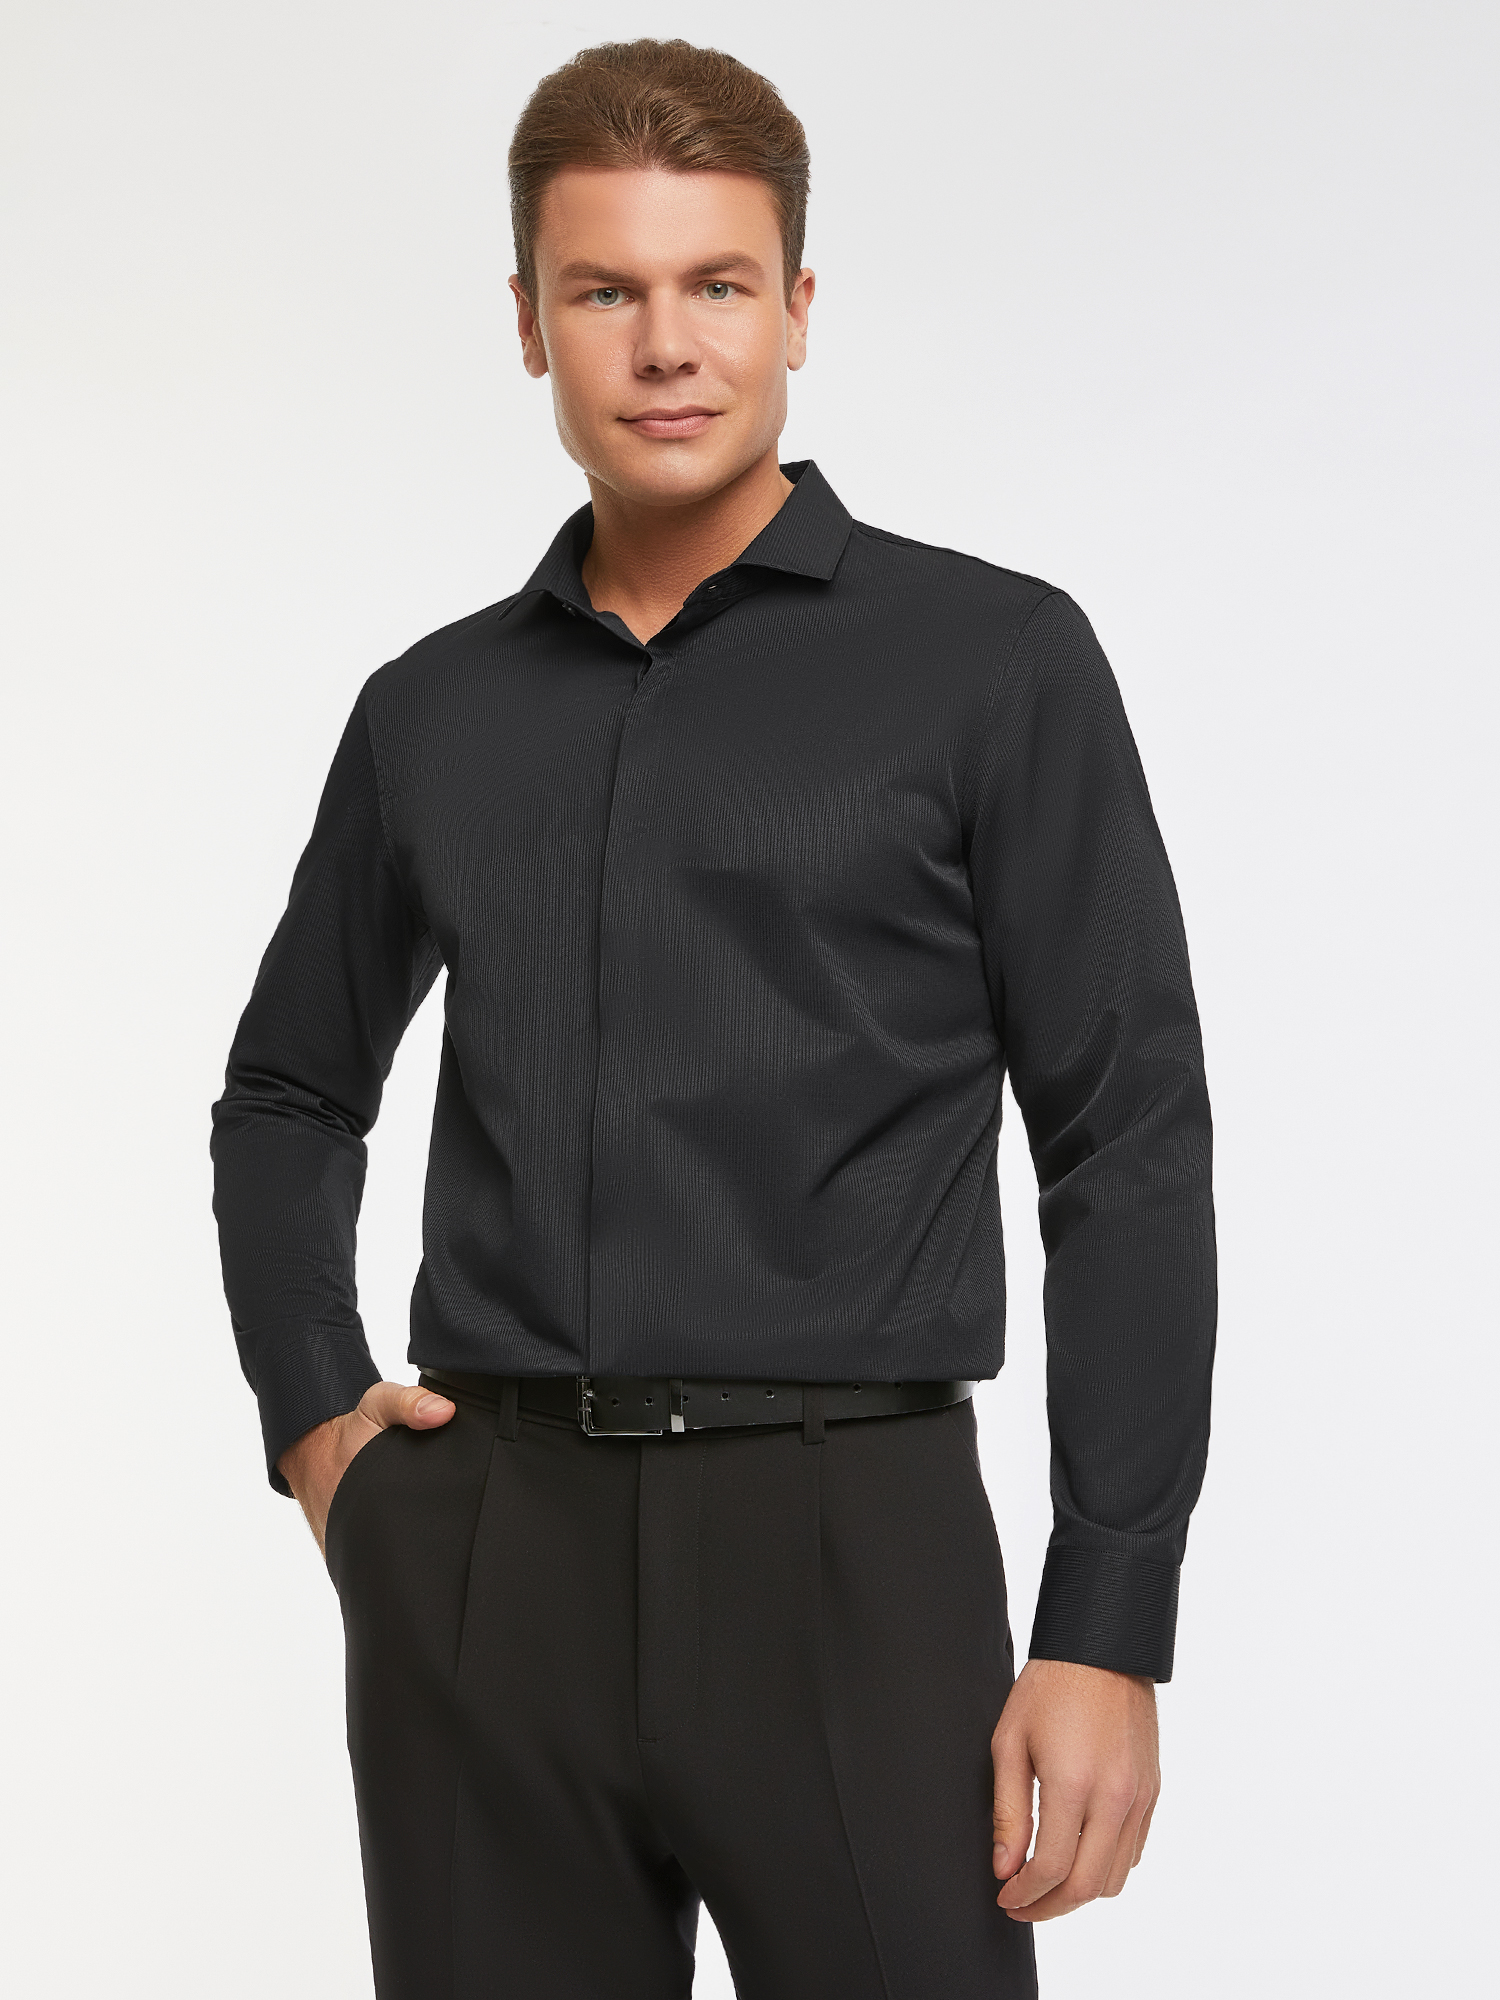 Рубашка мужская oodji 3B110017M-7 черная XS